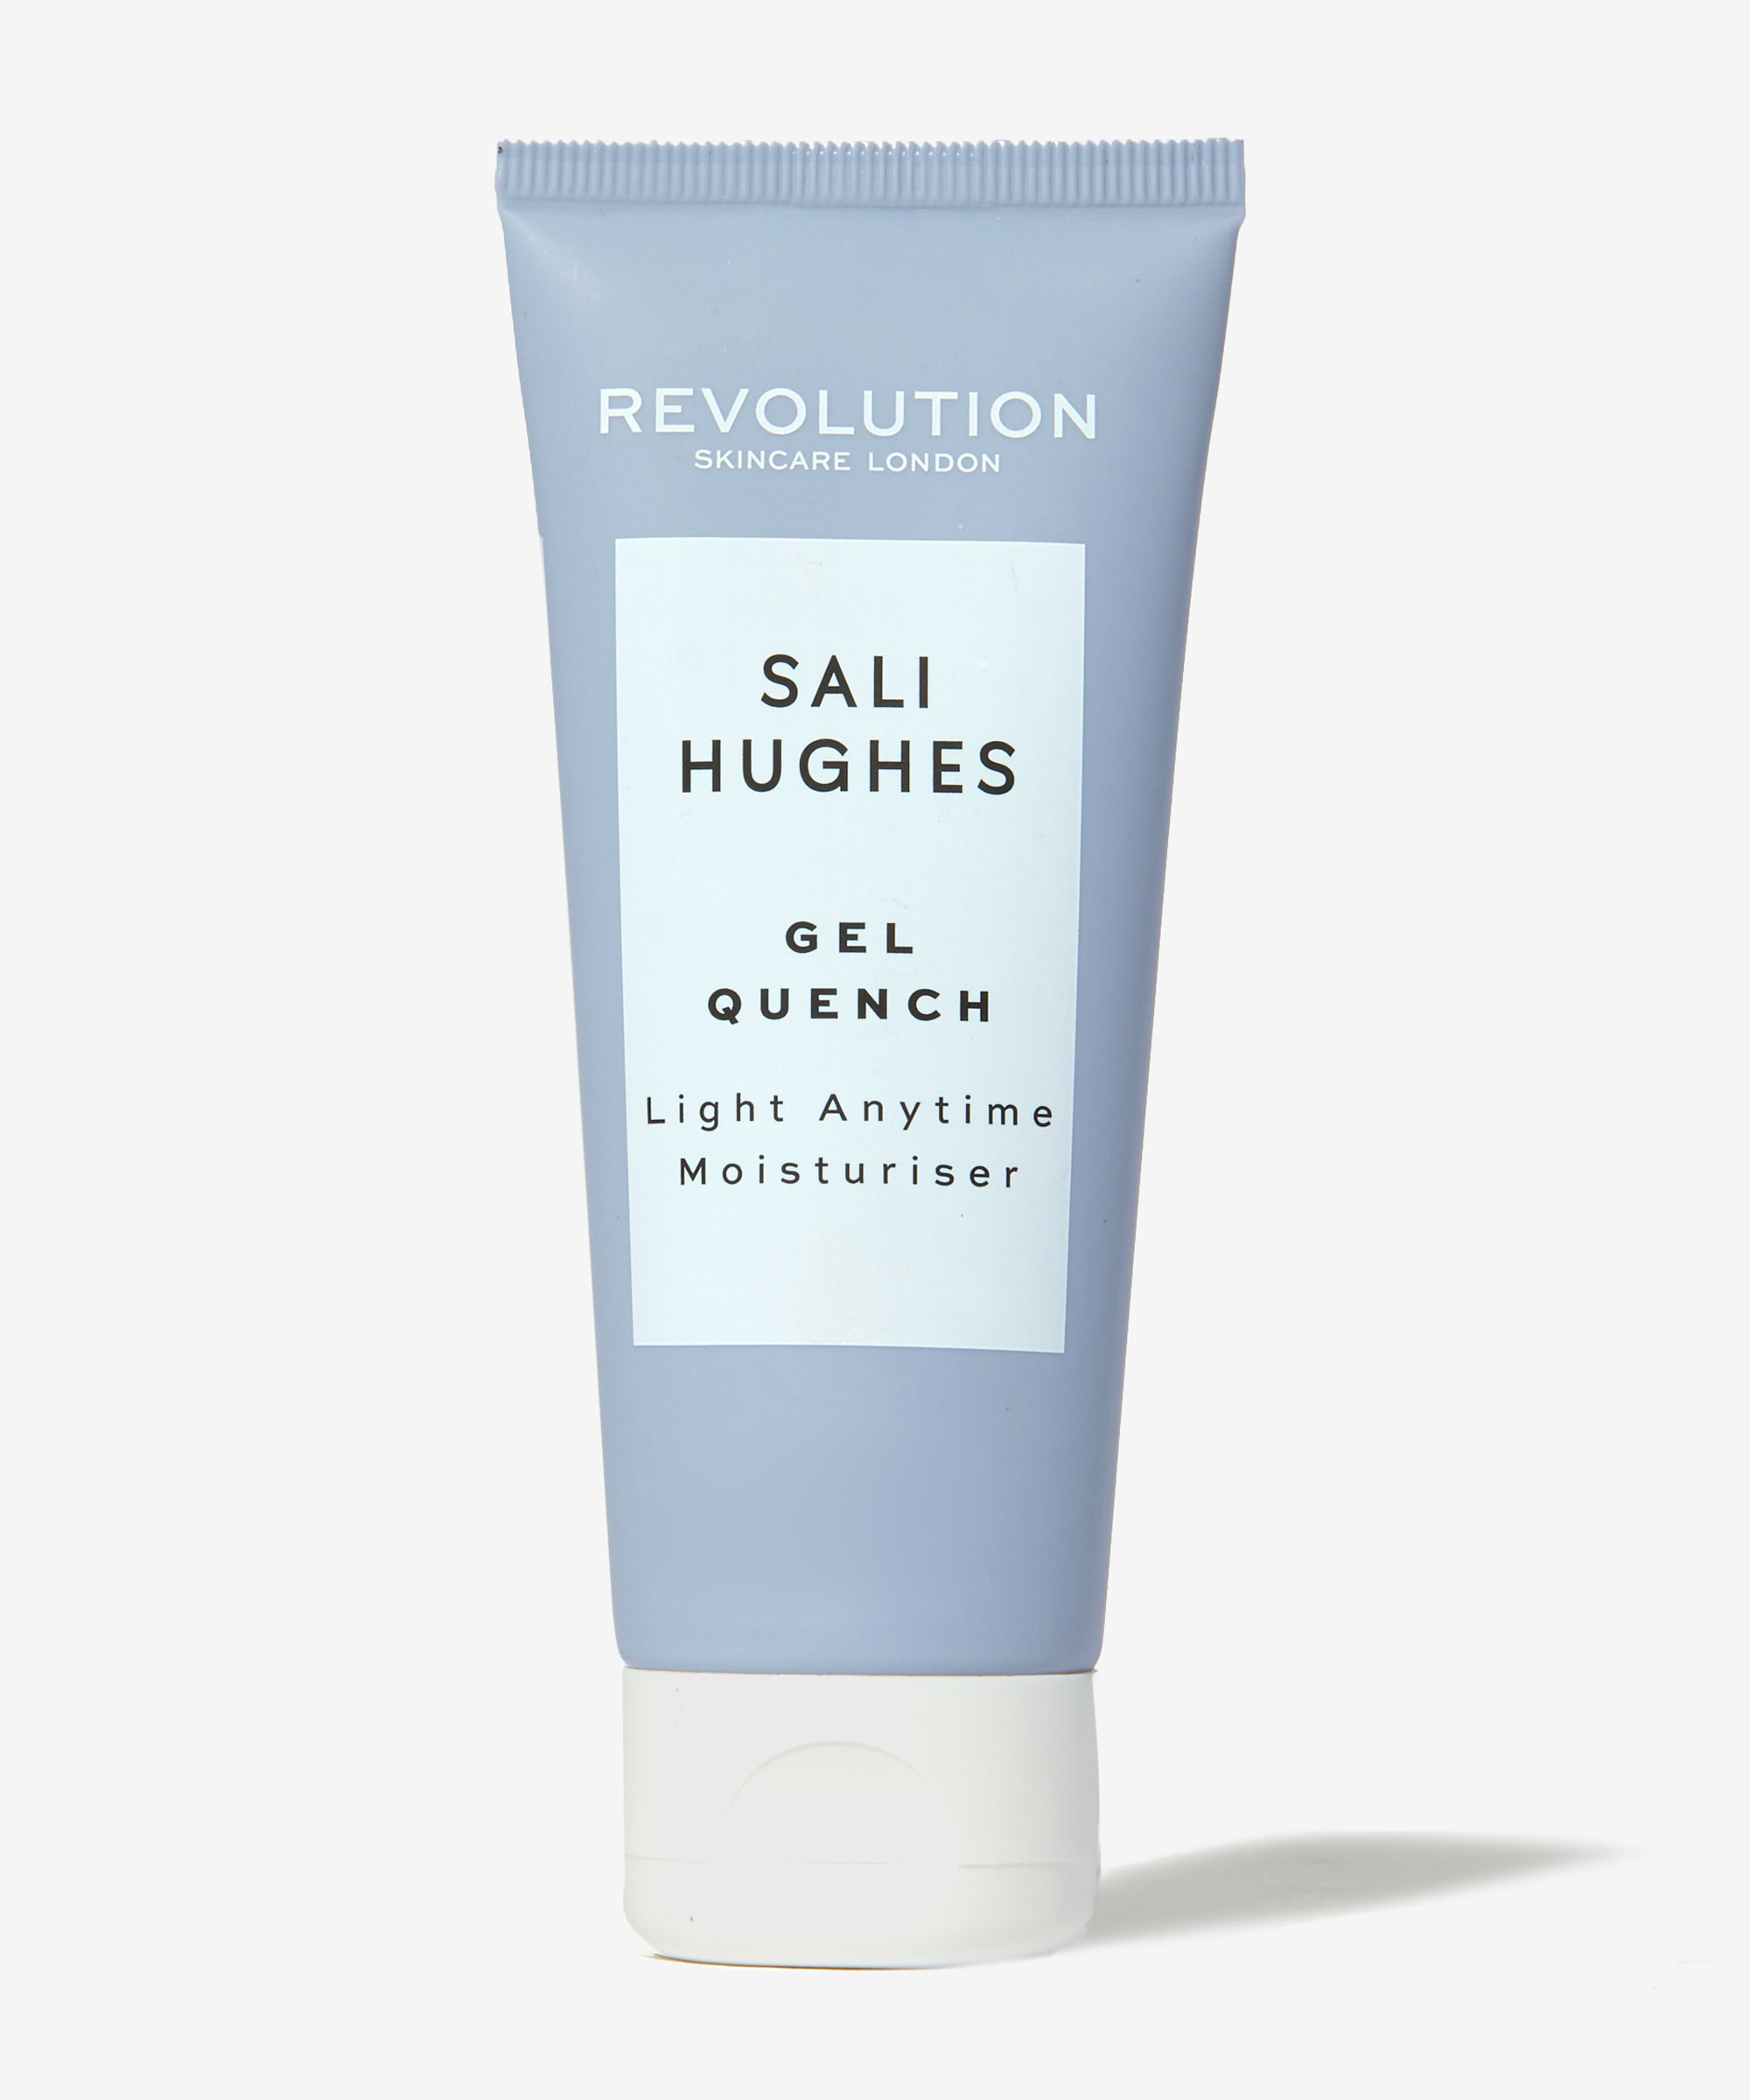 Revolution Skincare Revolution Skincare X Sali Hughes Gel Quench